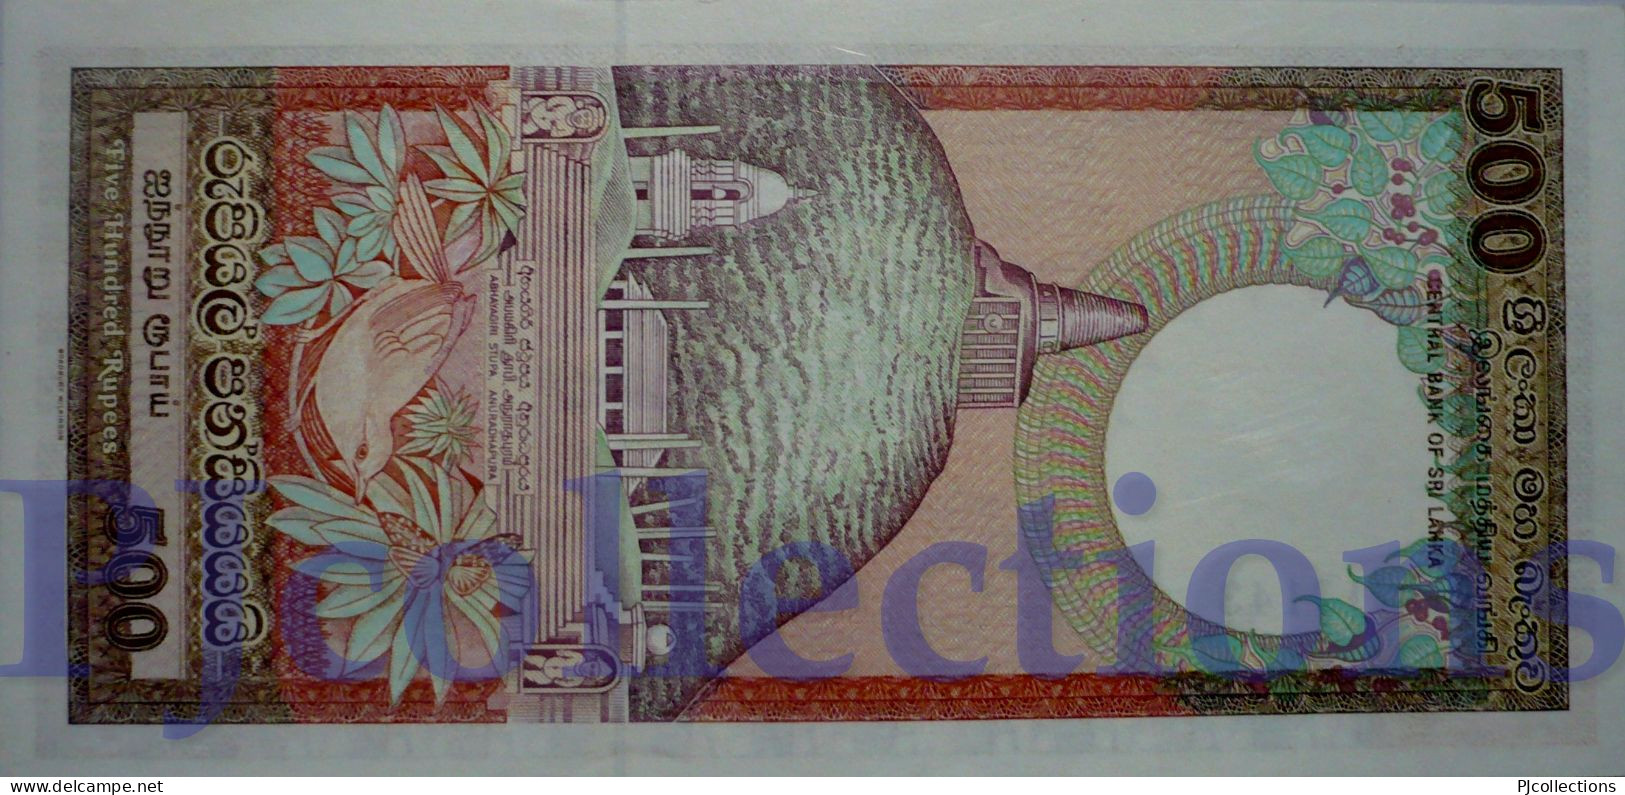 SRI LANKA 500 RUPEES 1989 PICK 100c AUNC - Sri Lanka